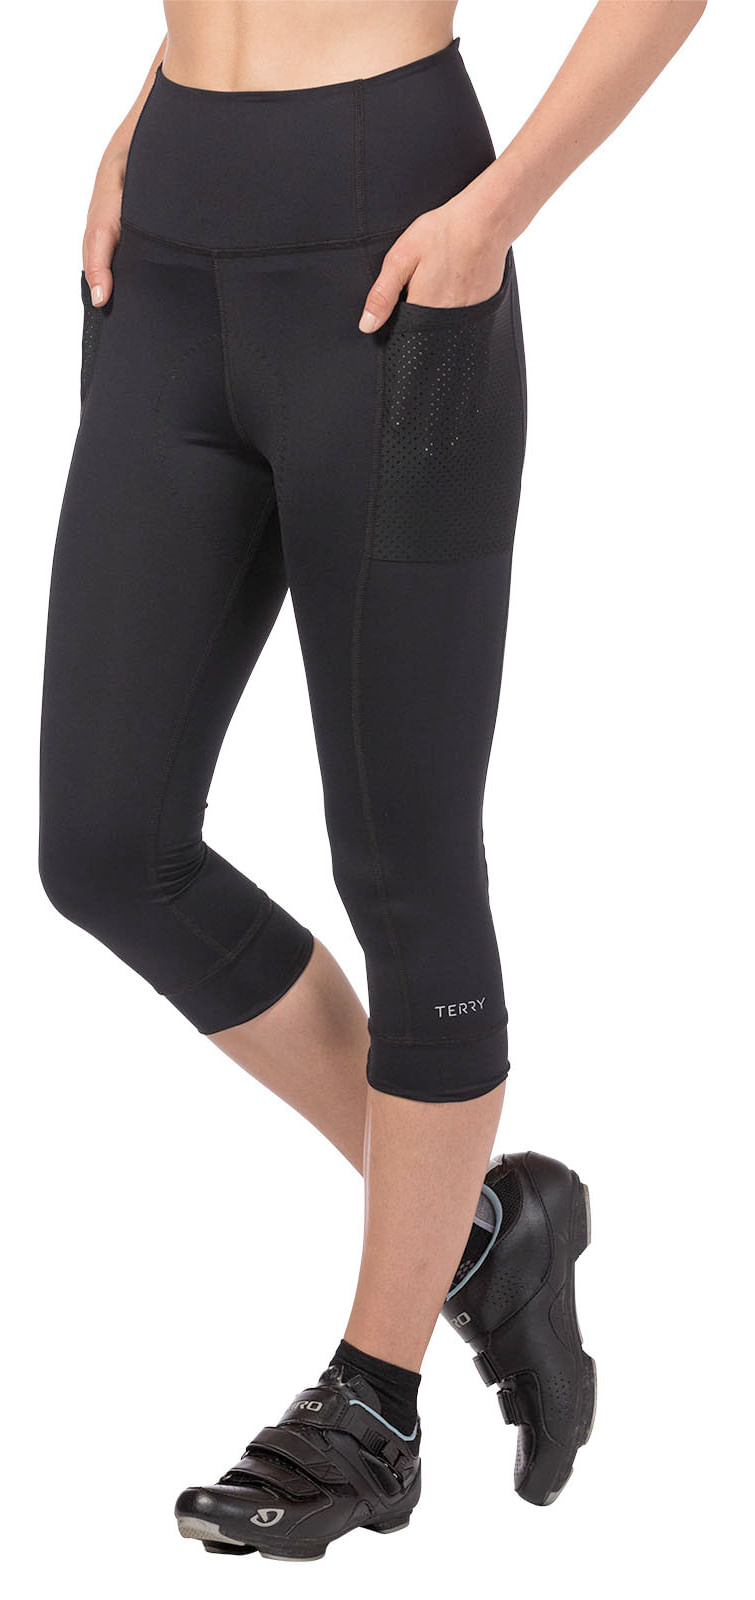 Lorna Jane v shaped elastic waist leggings in black